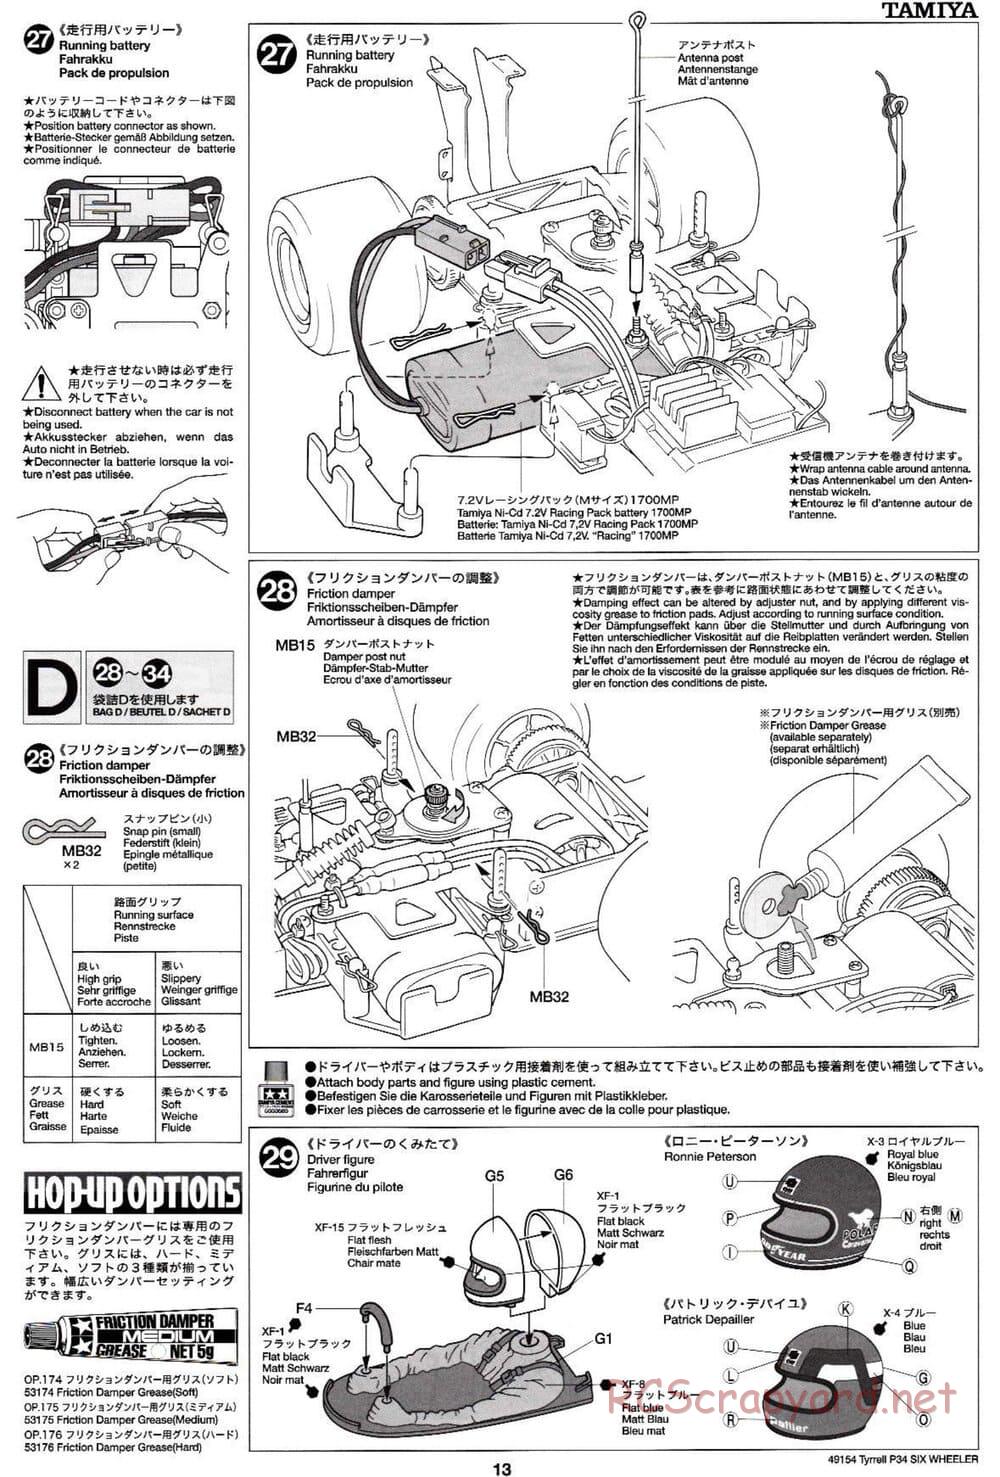 Tamiya - Tyrrell P34 Six Wheeler - F103-6W Chassis - Manual - Page 13